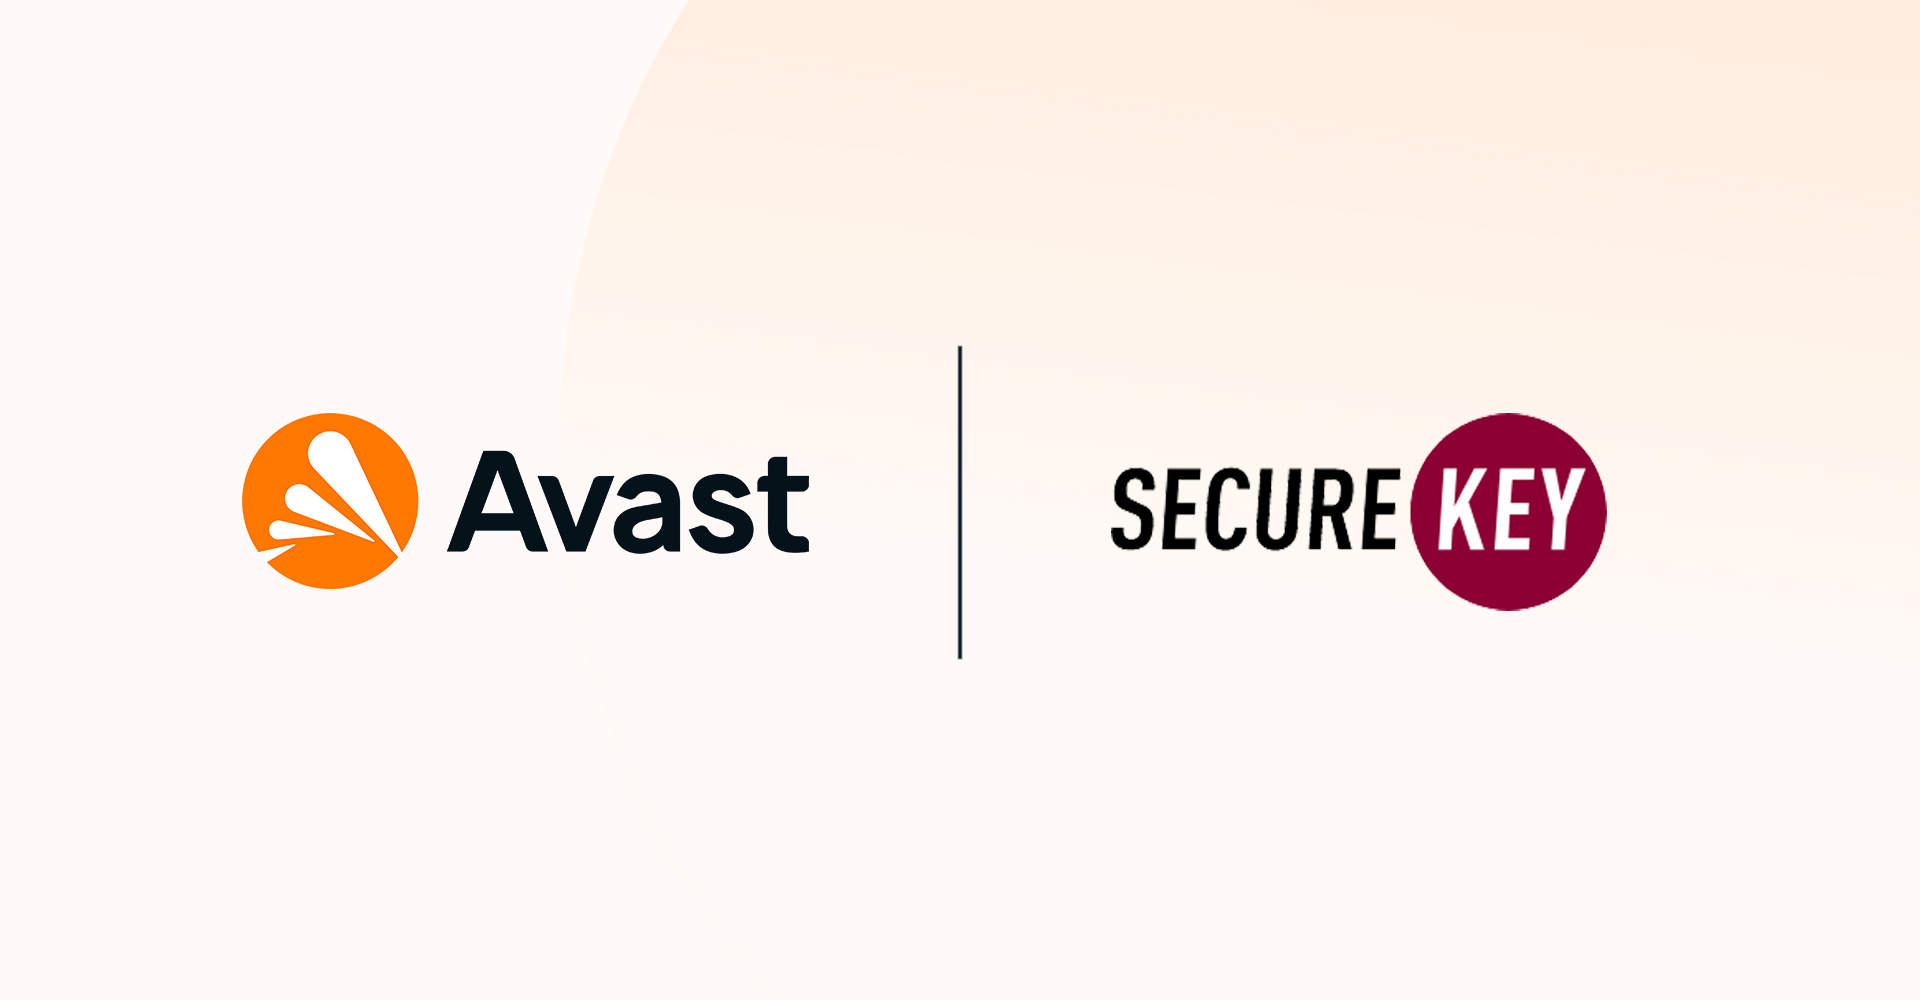 Avast and SecureKey images